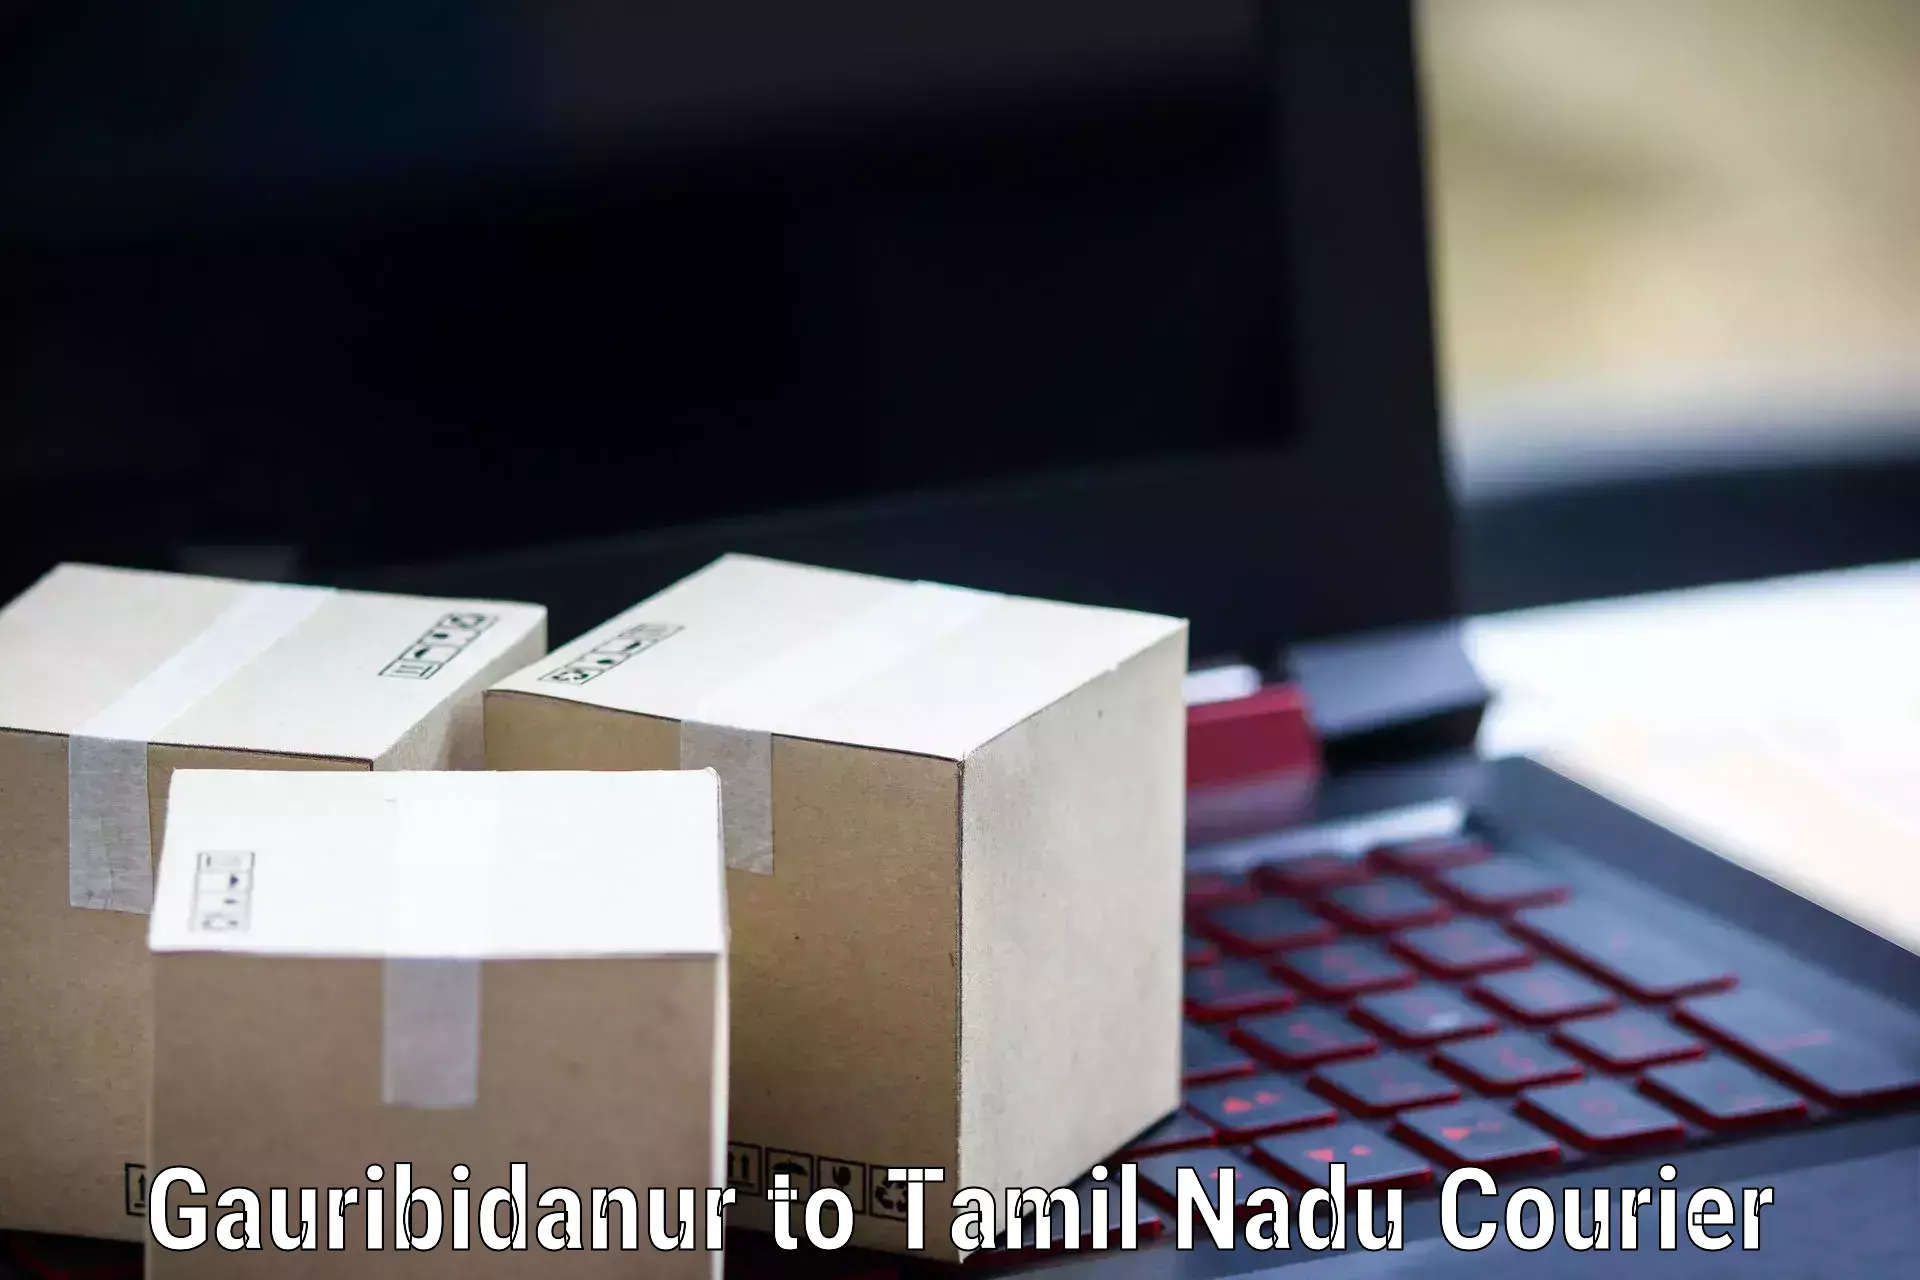 Full-service courier options Gauribidanur to Mettupalayam